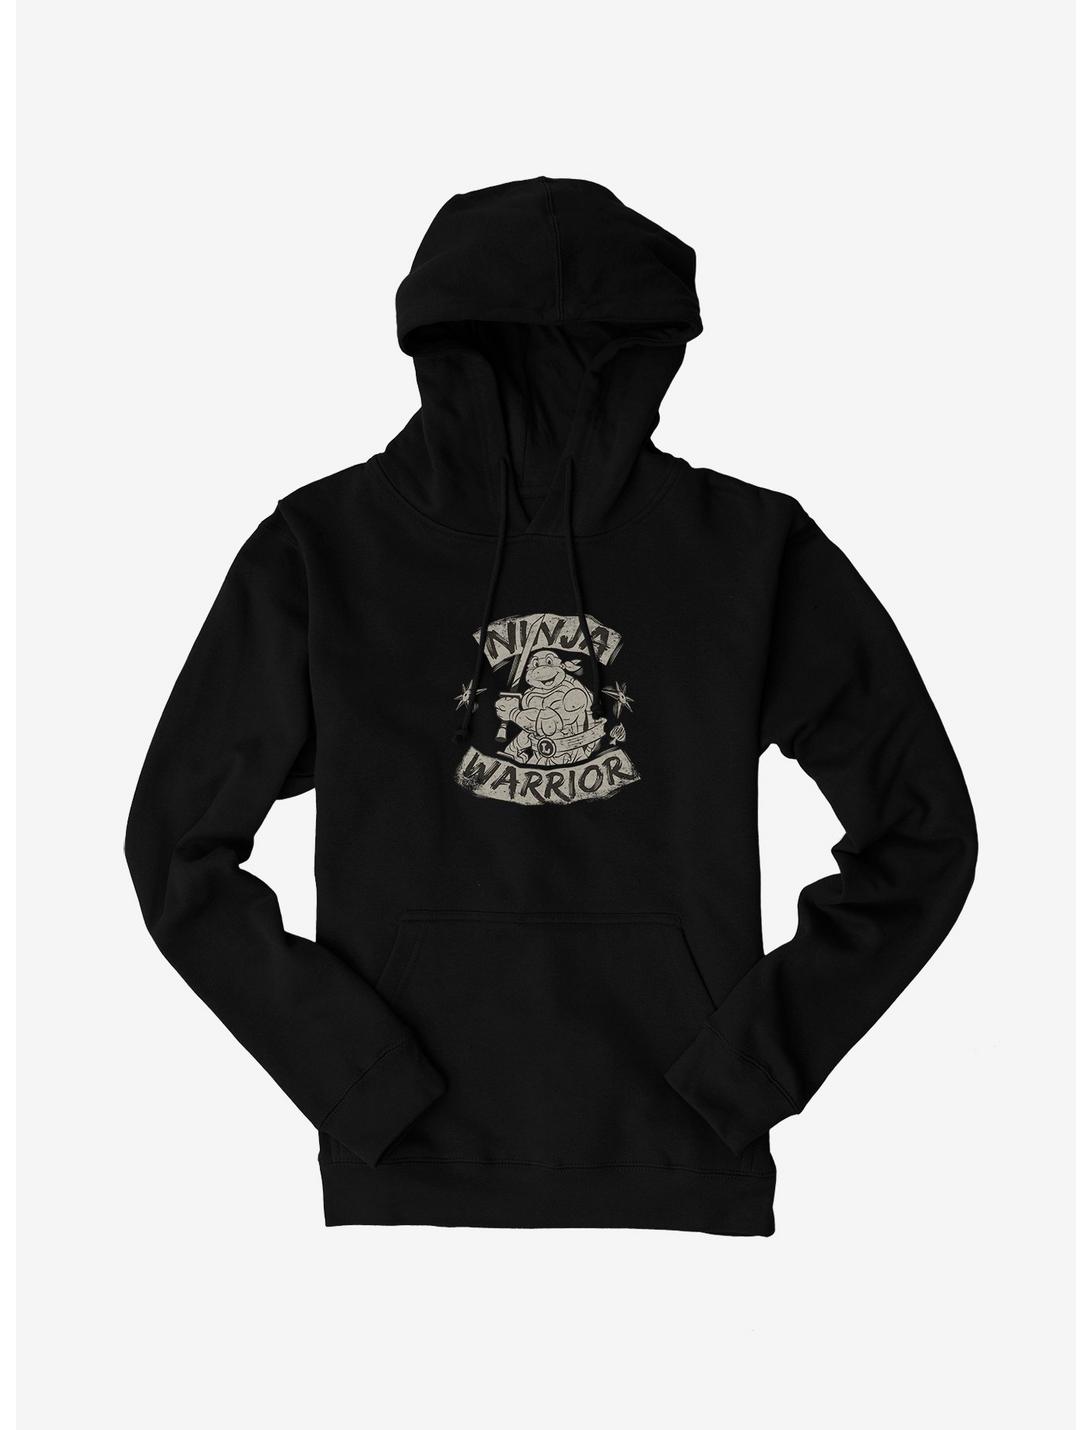 Samurai Ninja warrior new hoodie hooded unisex cloth winter summer hoodie christmas gift